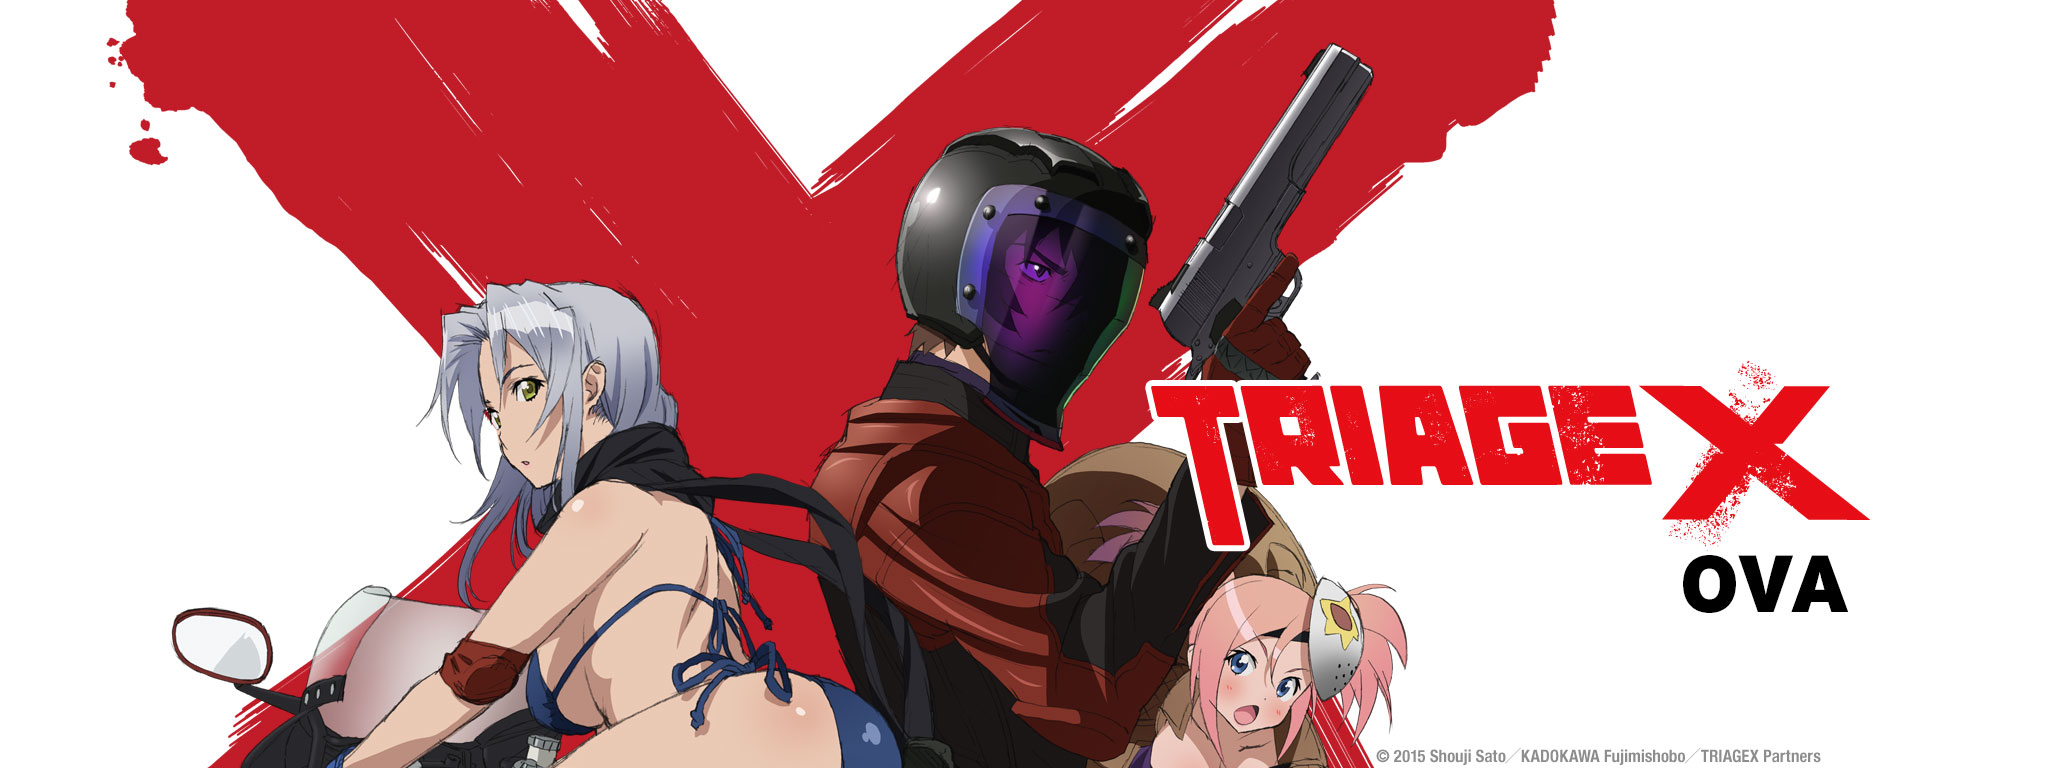 Title Art for Triage X OVA